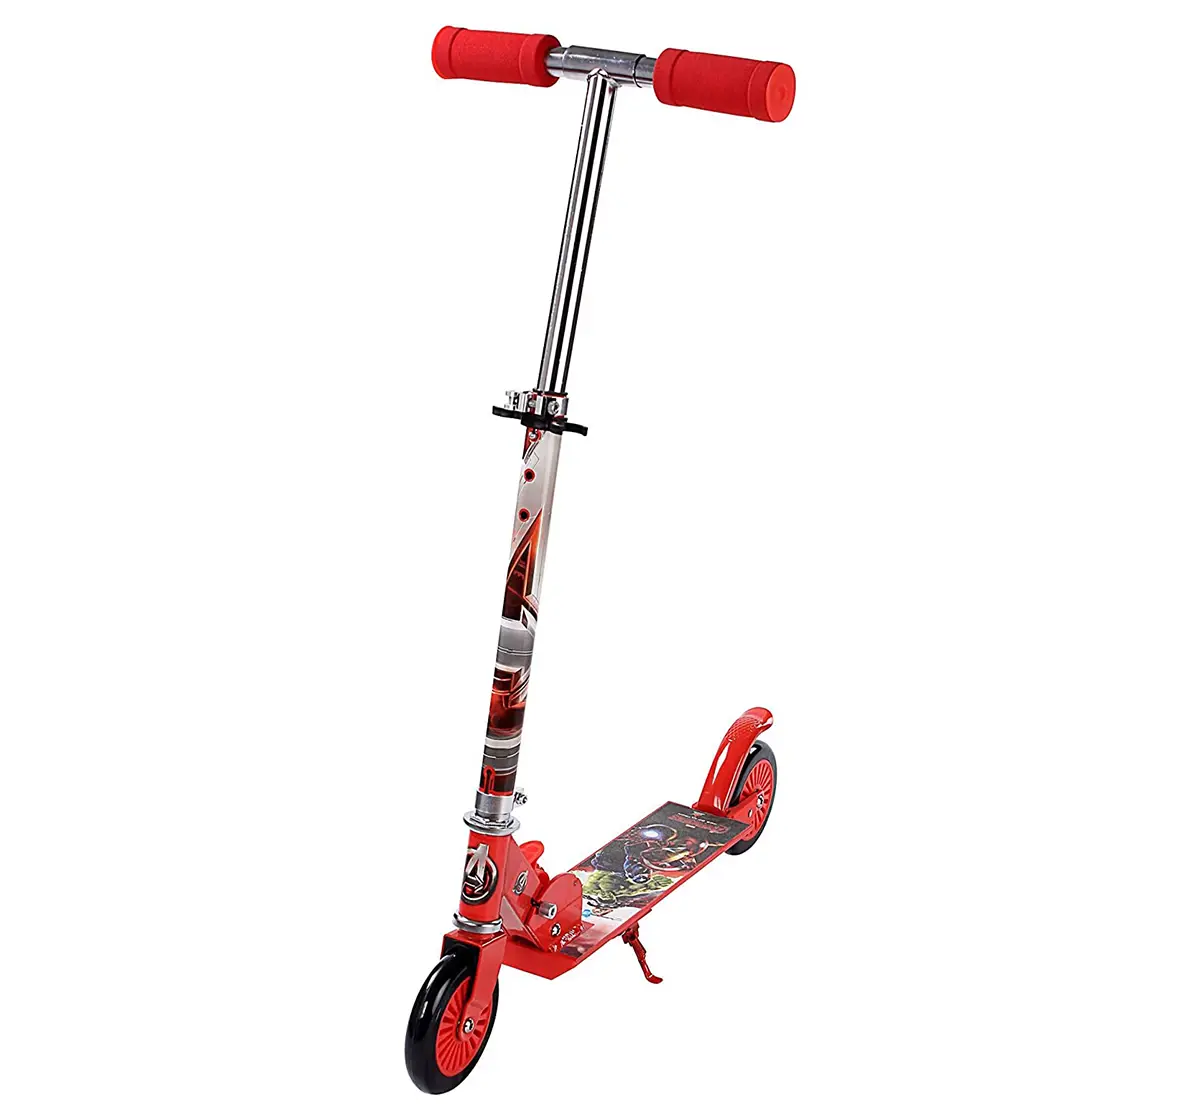 Rowan Avengers 2 Wheel Scooter for Kids 4Y+, Red